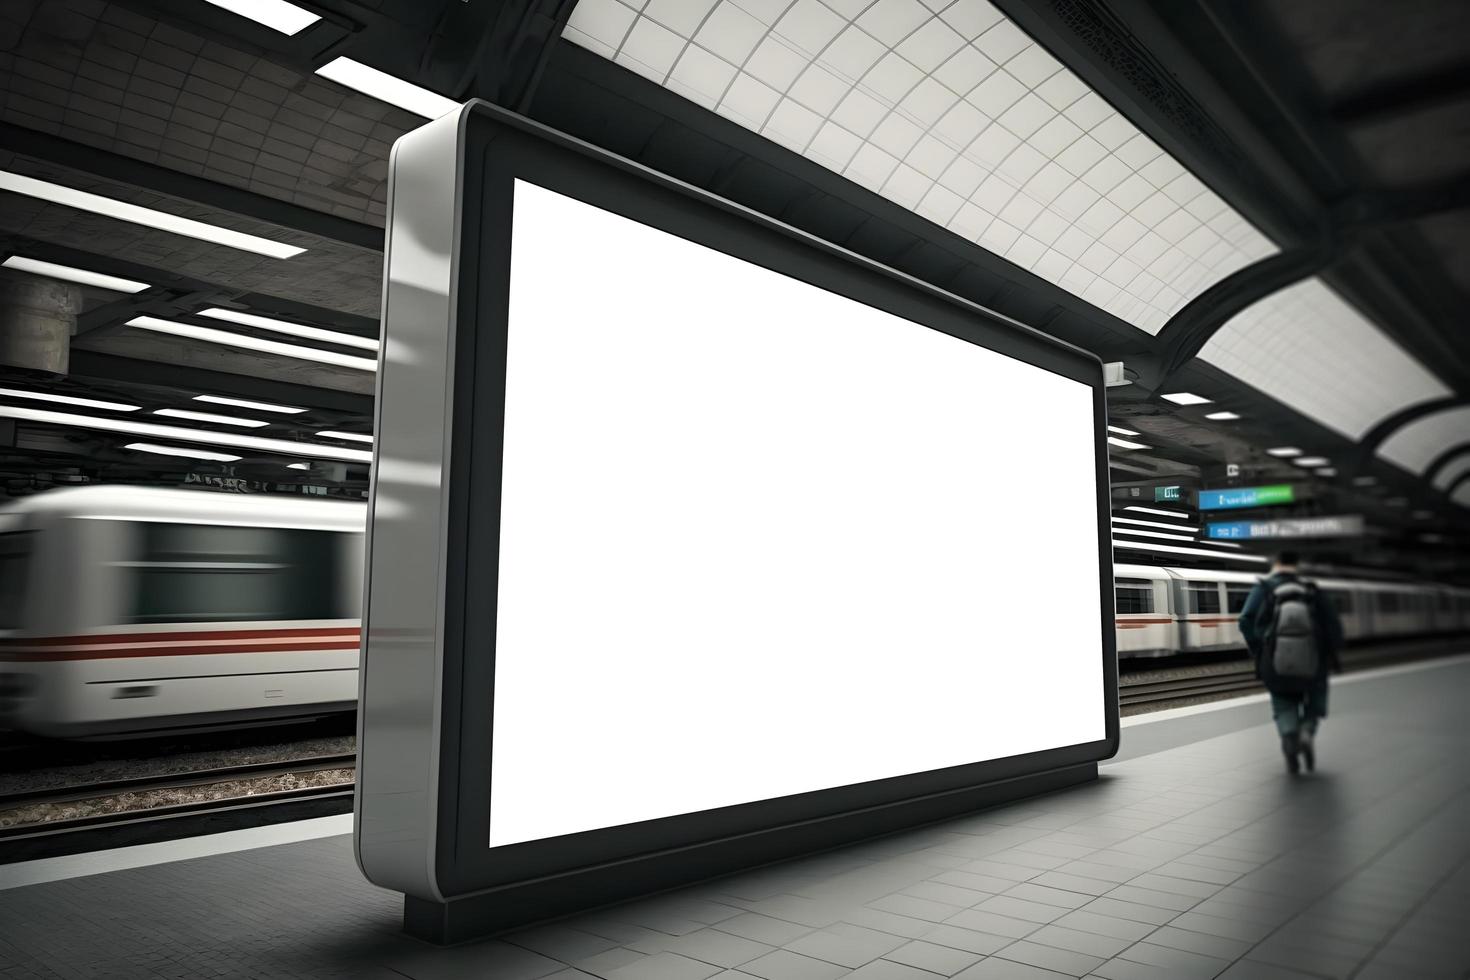 vuoto orizzontale tabellone a metropolitana metropolitana , la metropolitana stazione, pubblicità tabellone metropolitana foto